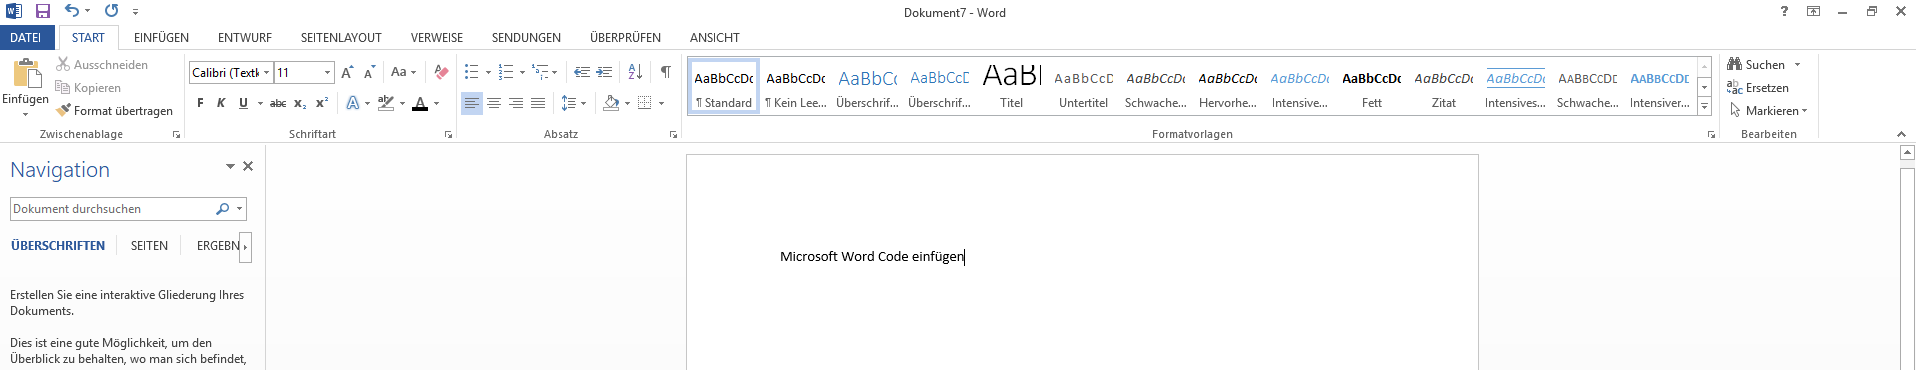 Code In Word Einfugen Blackit De 365 Code Code In Word Einfugen Eclipse Microsoft Office Source Syntax Highlighting Word Word Allgemein Scripte Windows